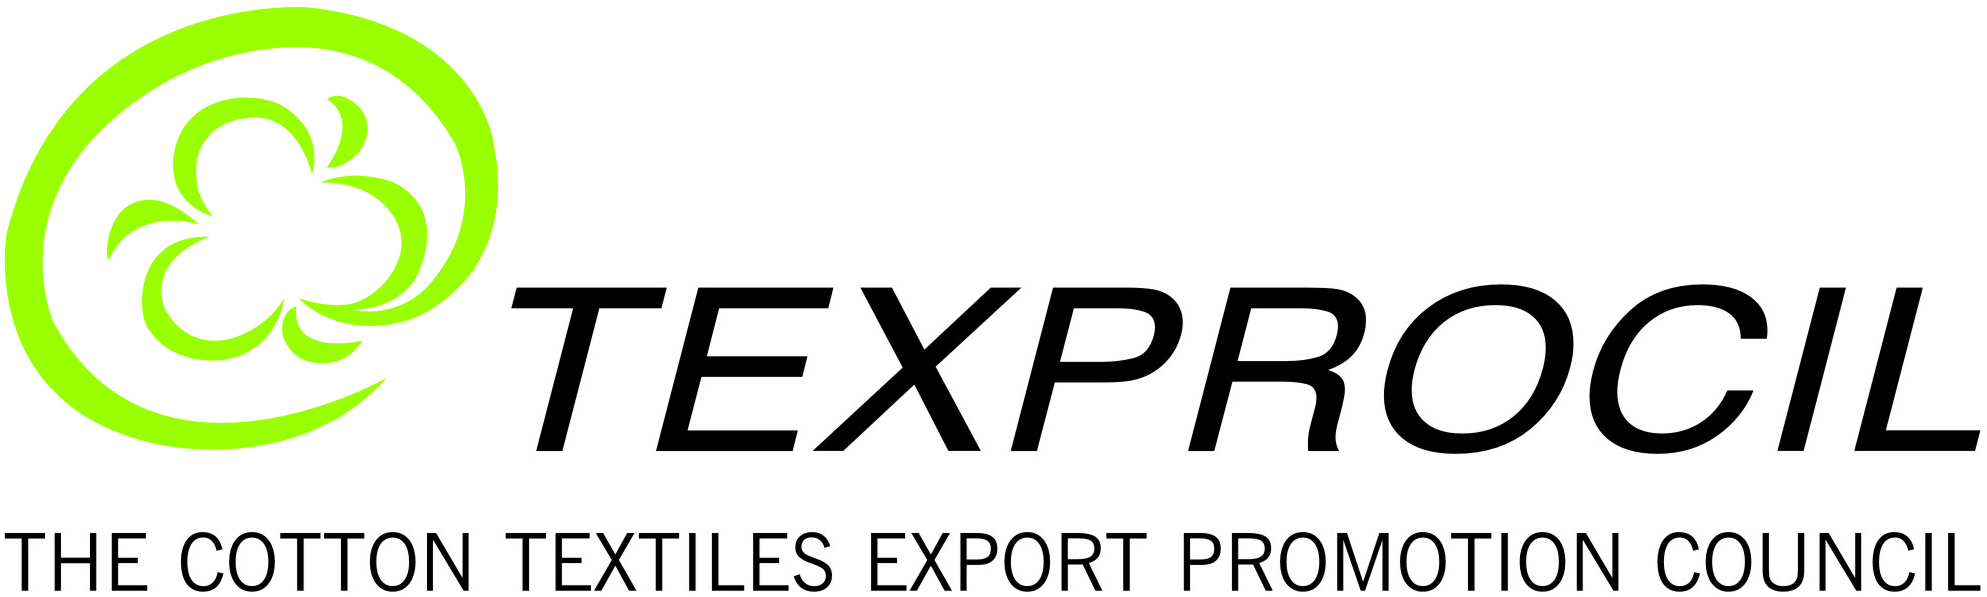 TEXPROCIL-Logo